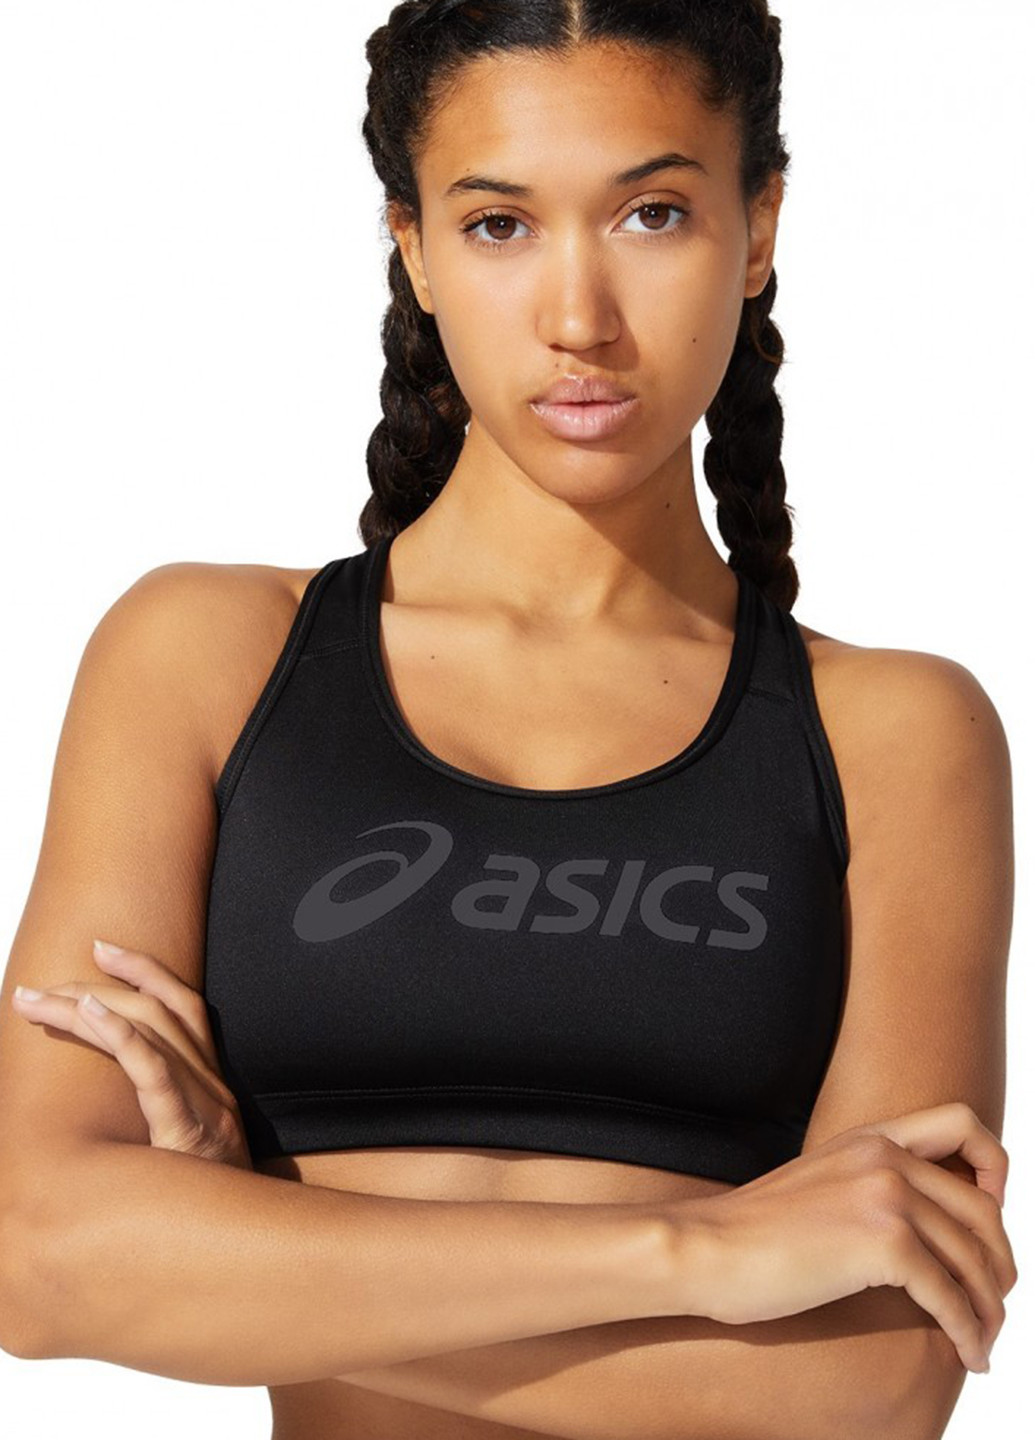 Топ Asics core asics logo bra (254550820)